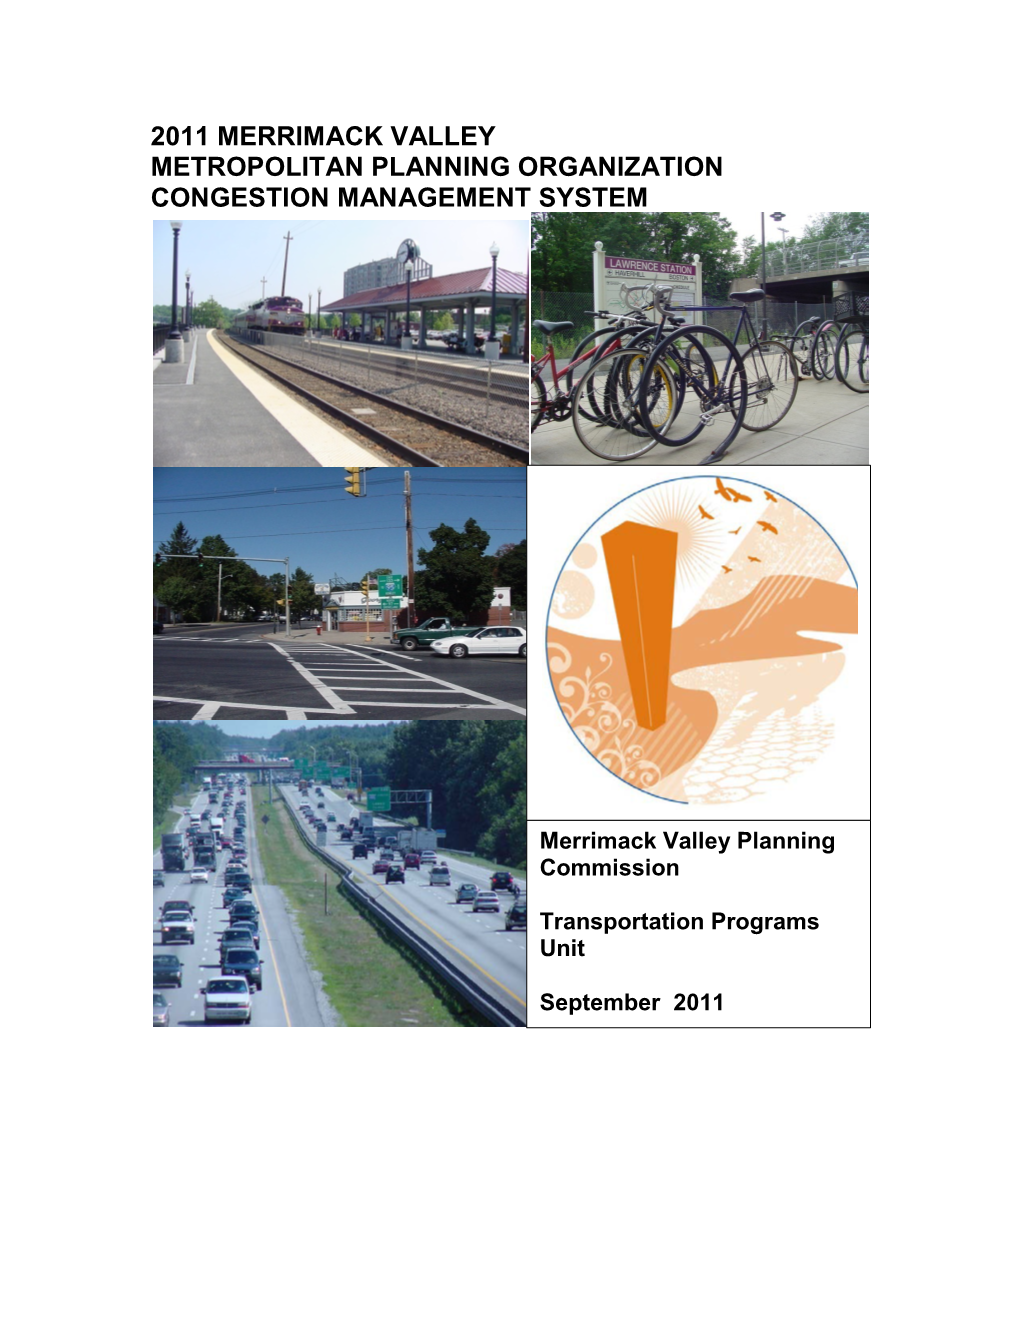 2011 Merrimack Valley Metropolitan Planning Organization Congestion Management System